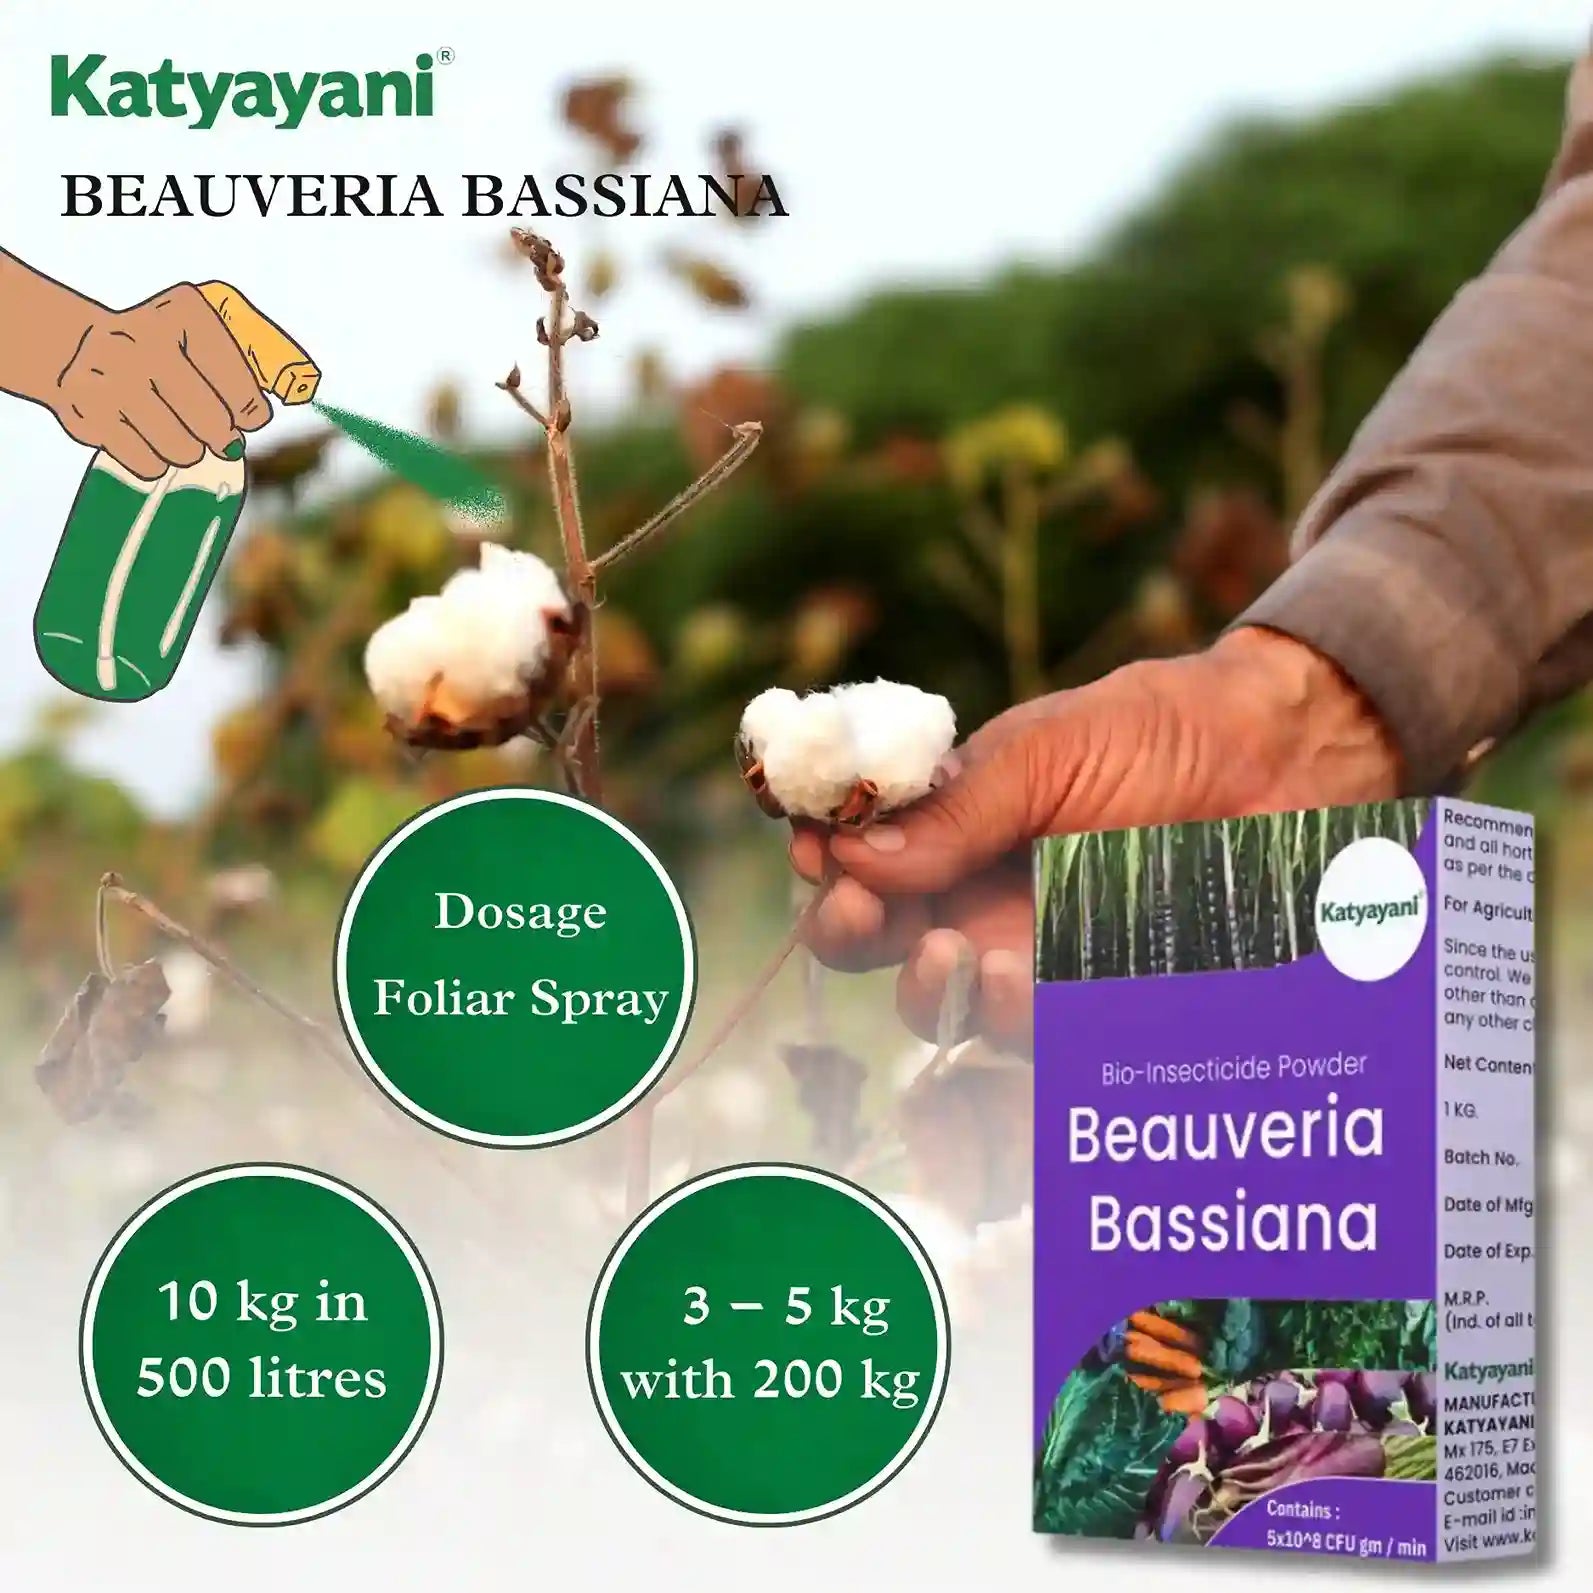 Katyayani Beauveria Bassiana Bio Insecticide Powder dosage